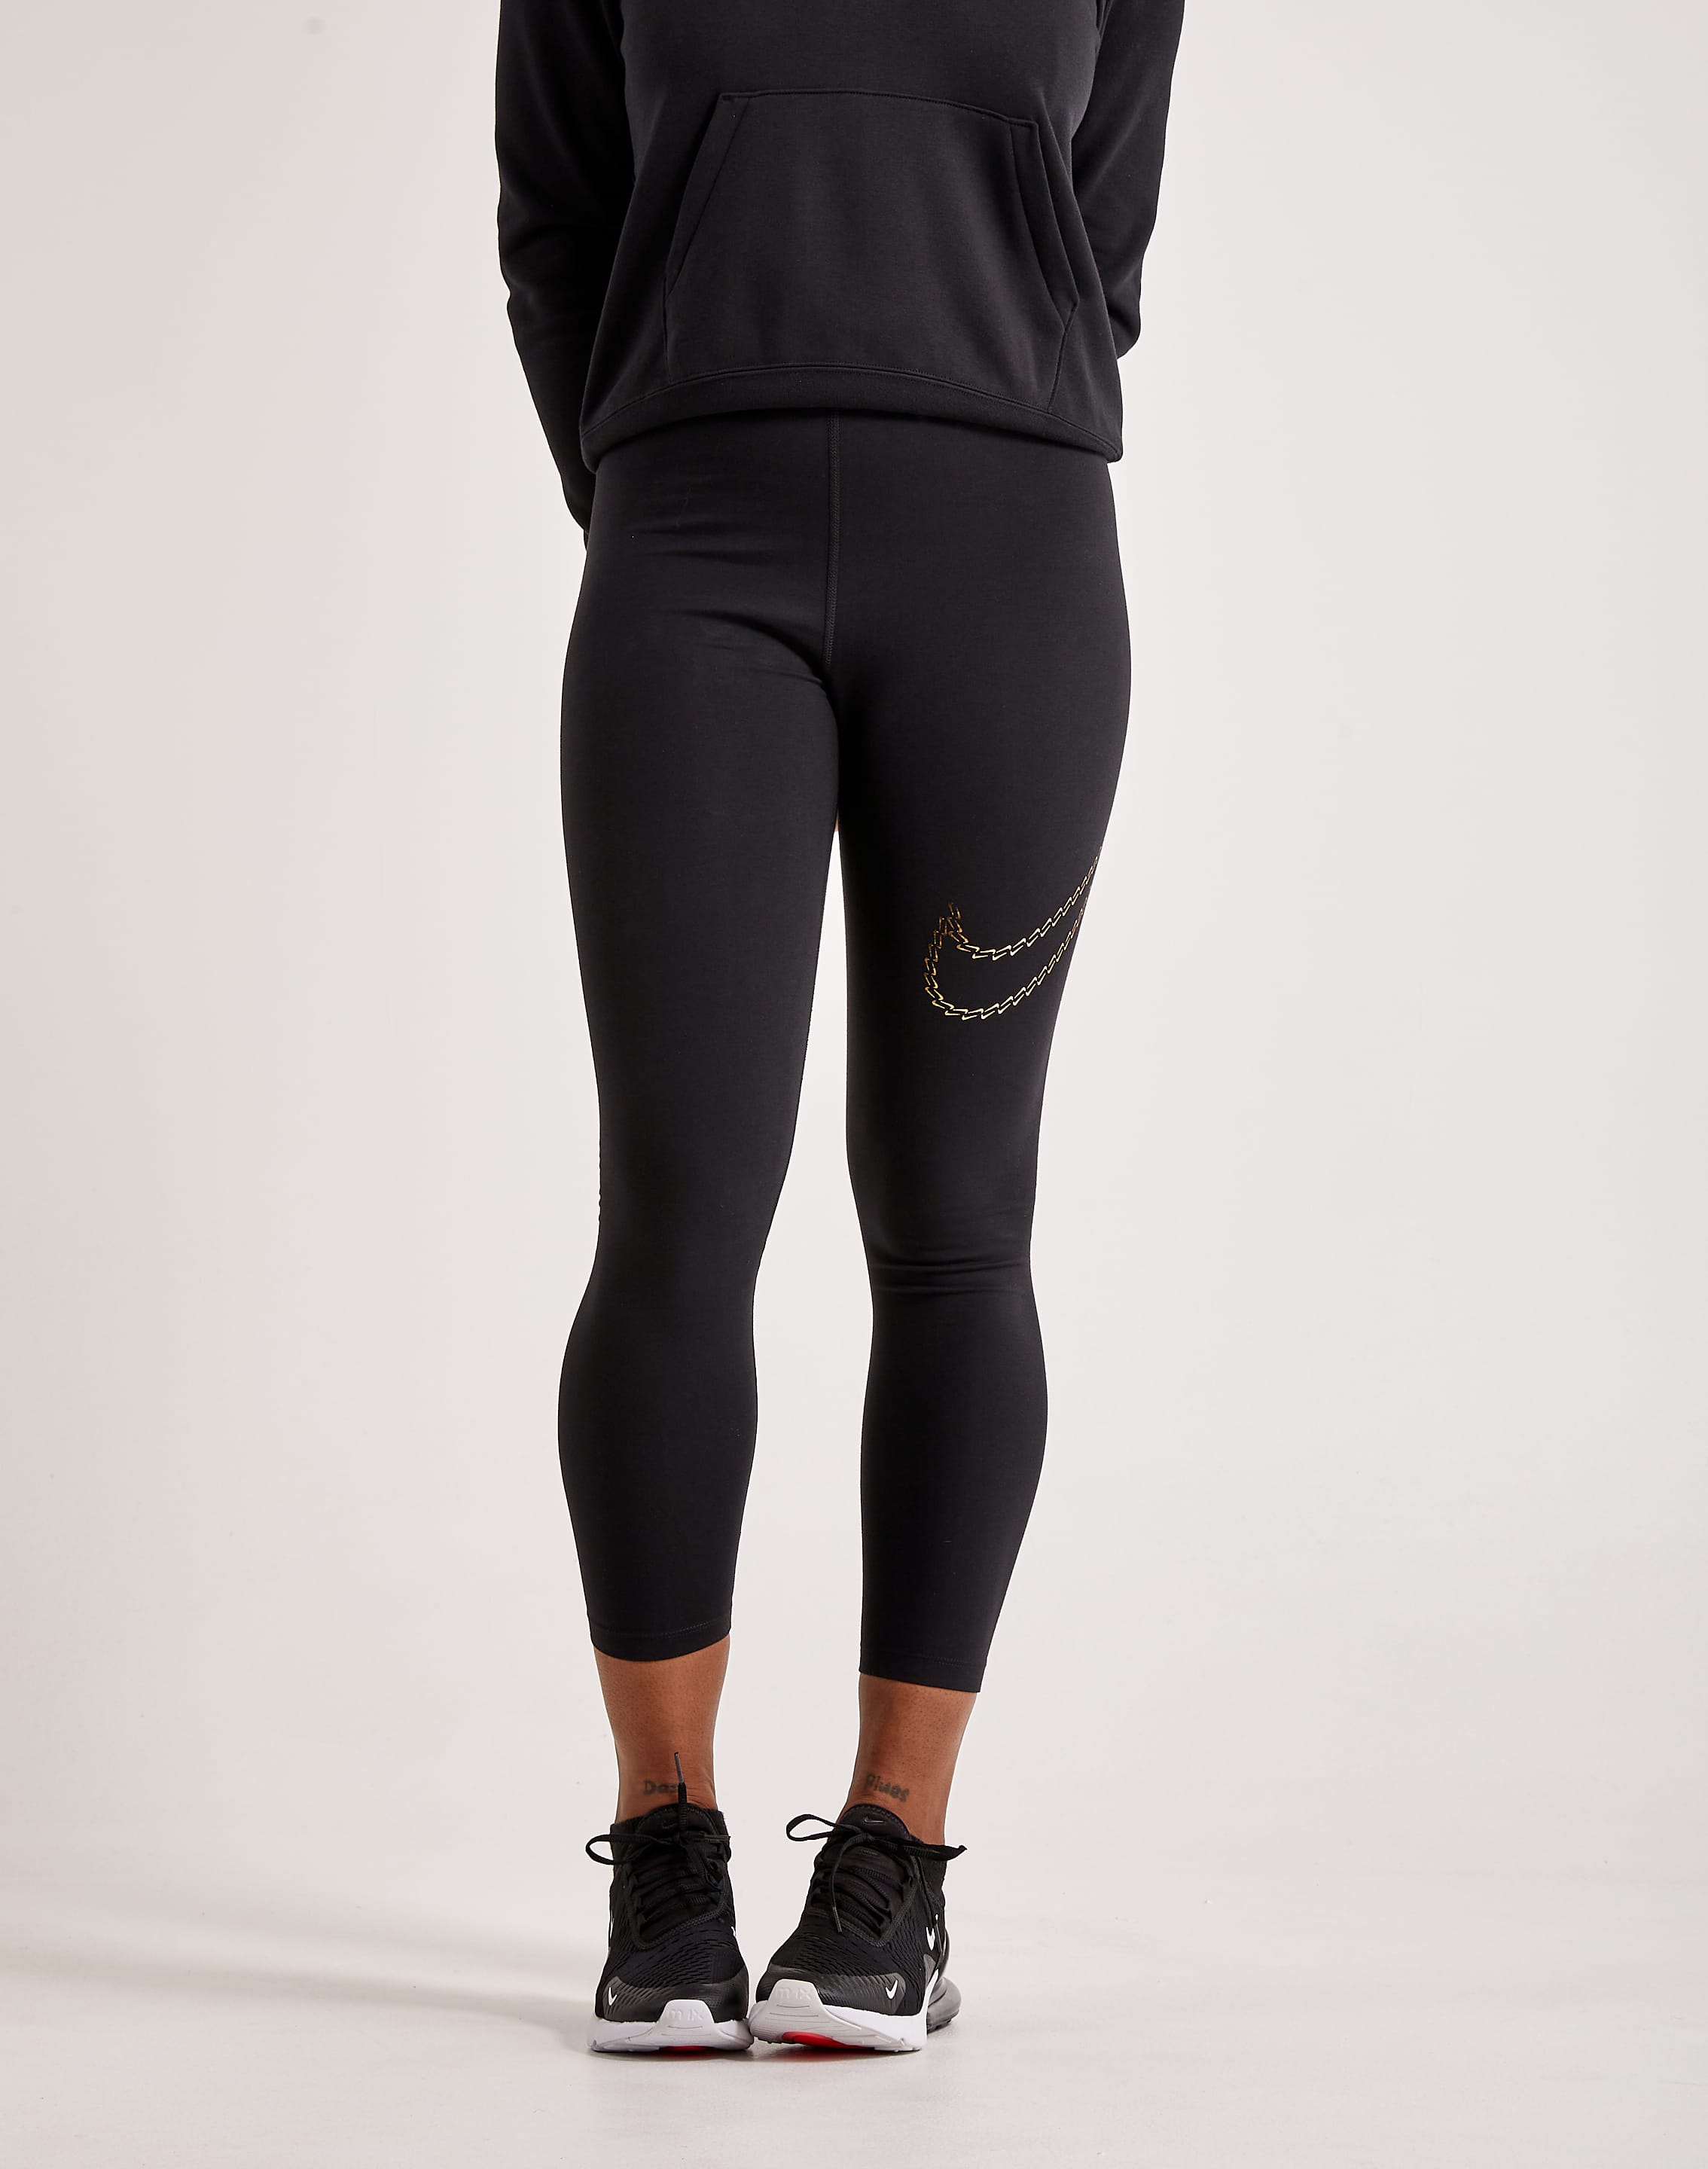 Nike Women's Swoosh High-Rise Leggings